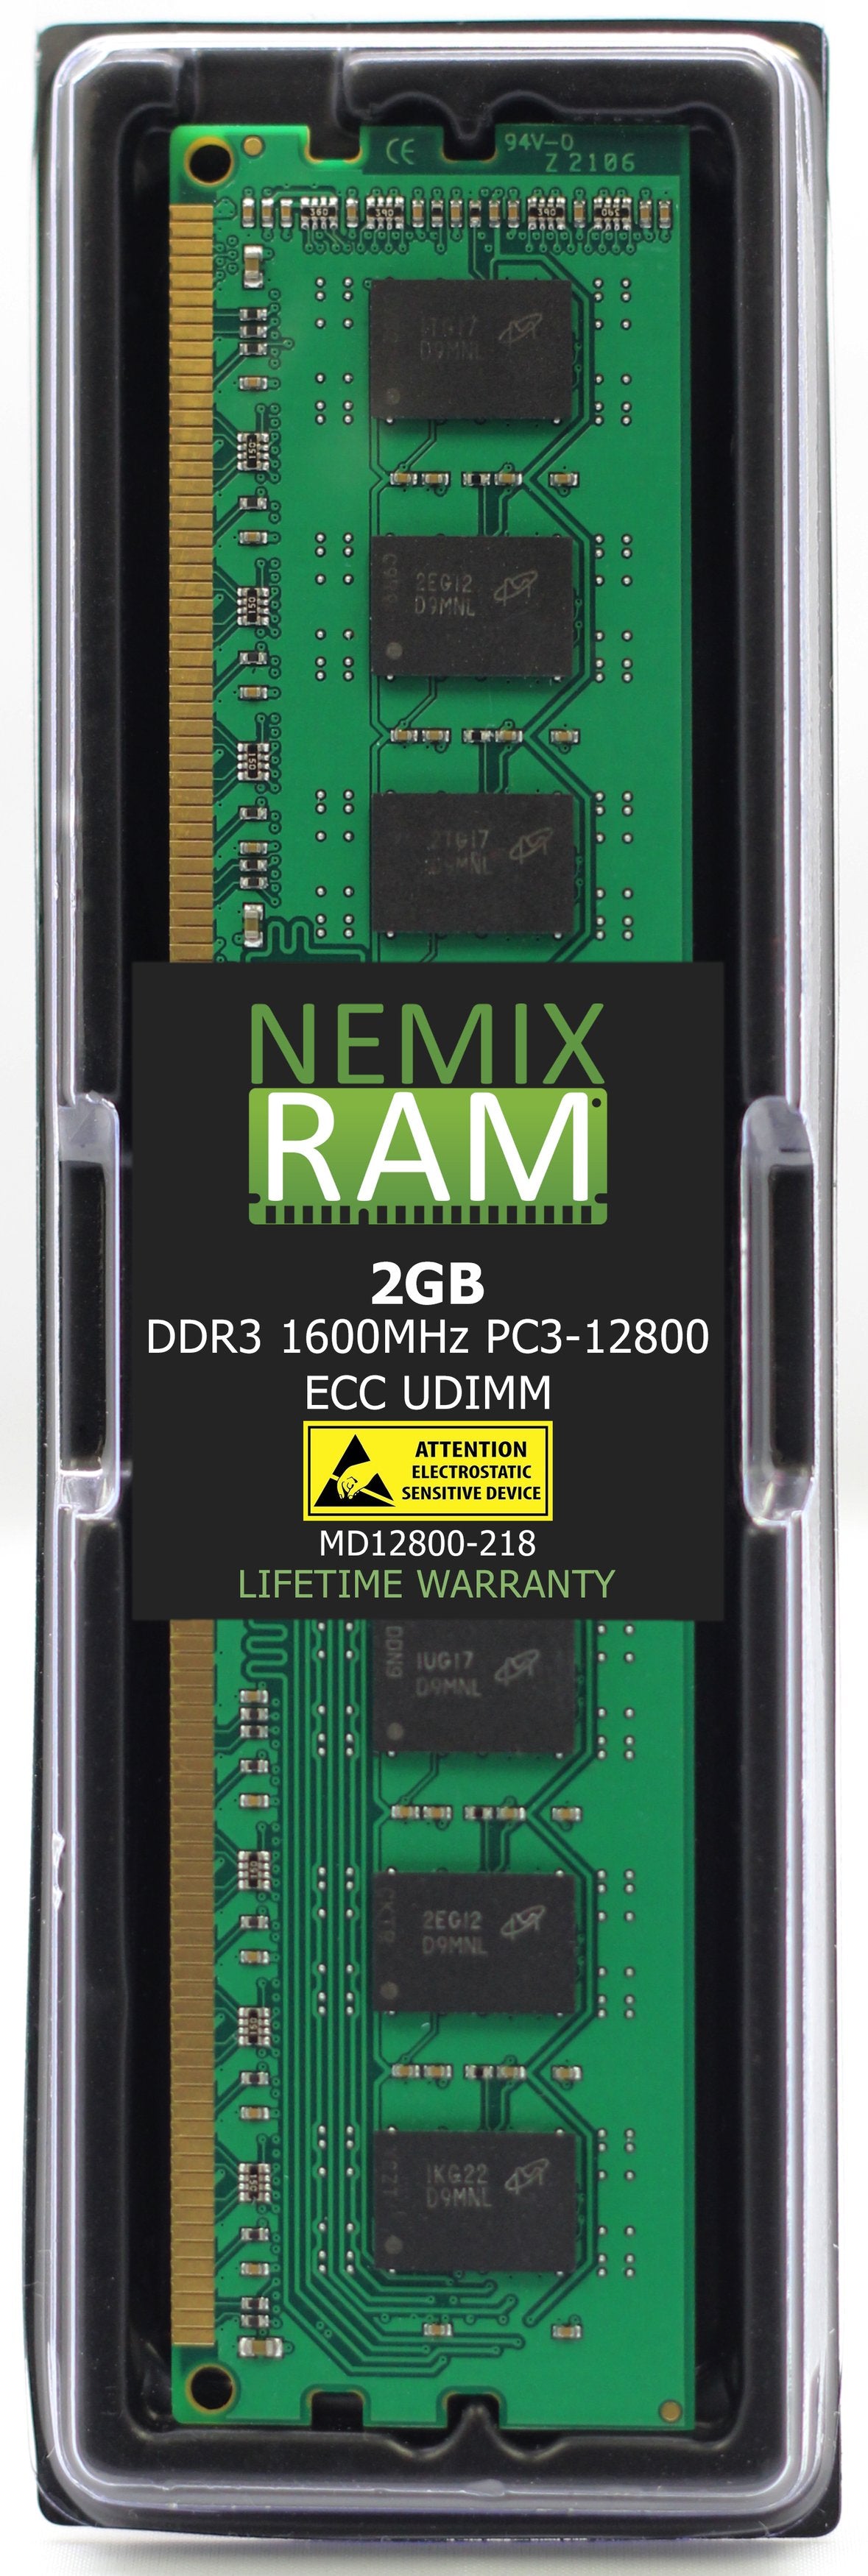 DELL SNP3X41TC/2G A8733210 2GB DDR3 1600MHZ PC3-12800 UDIMM Compatible Upgrade